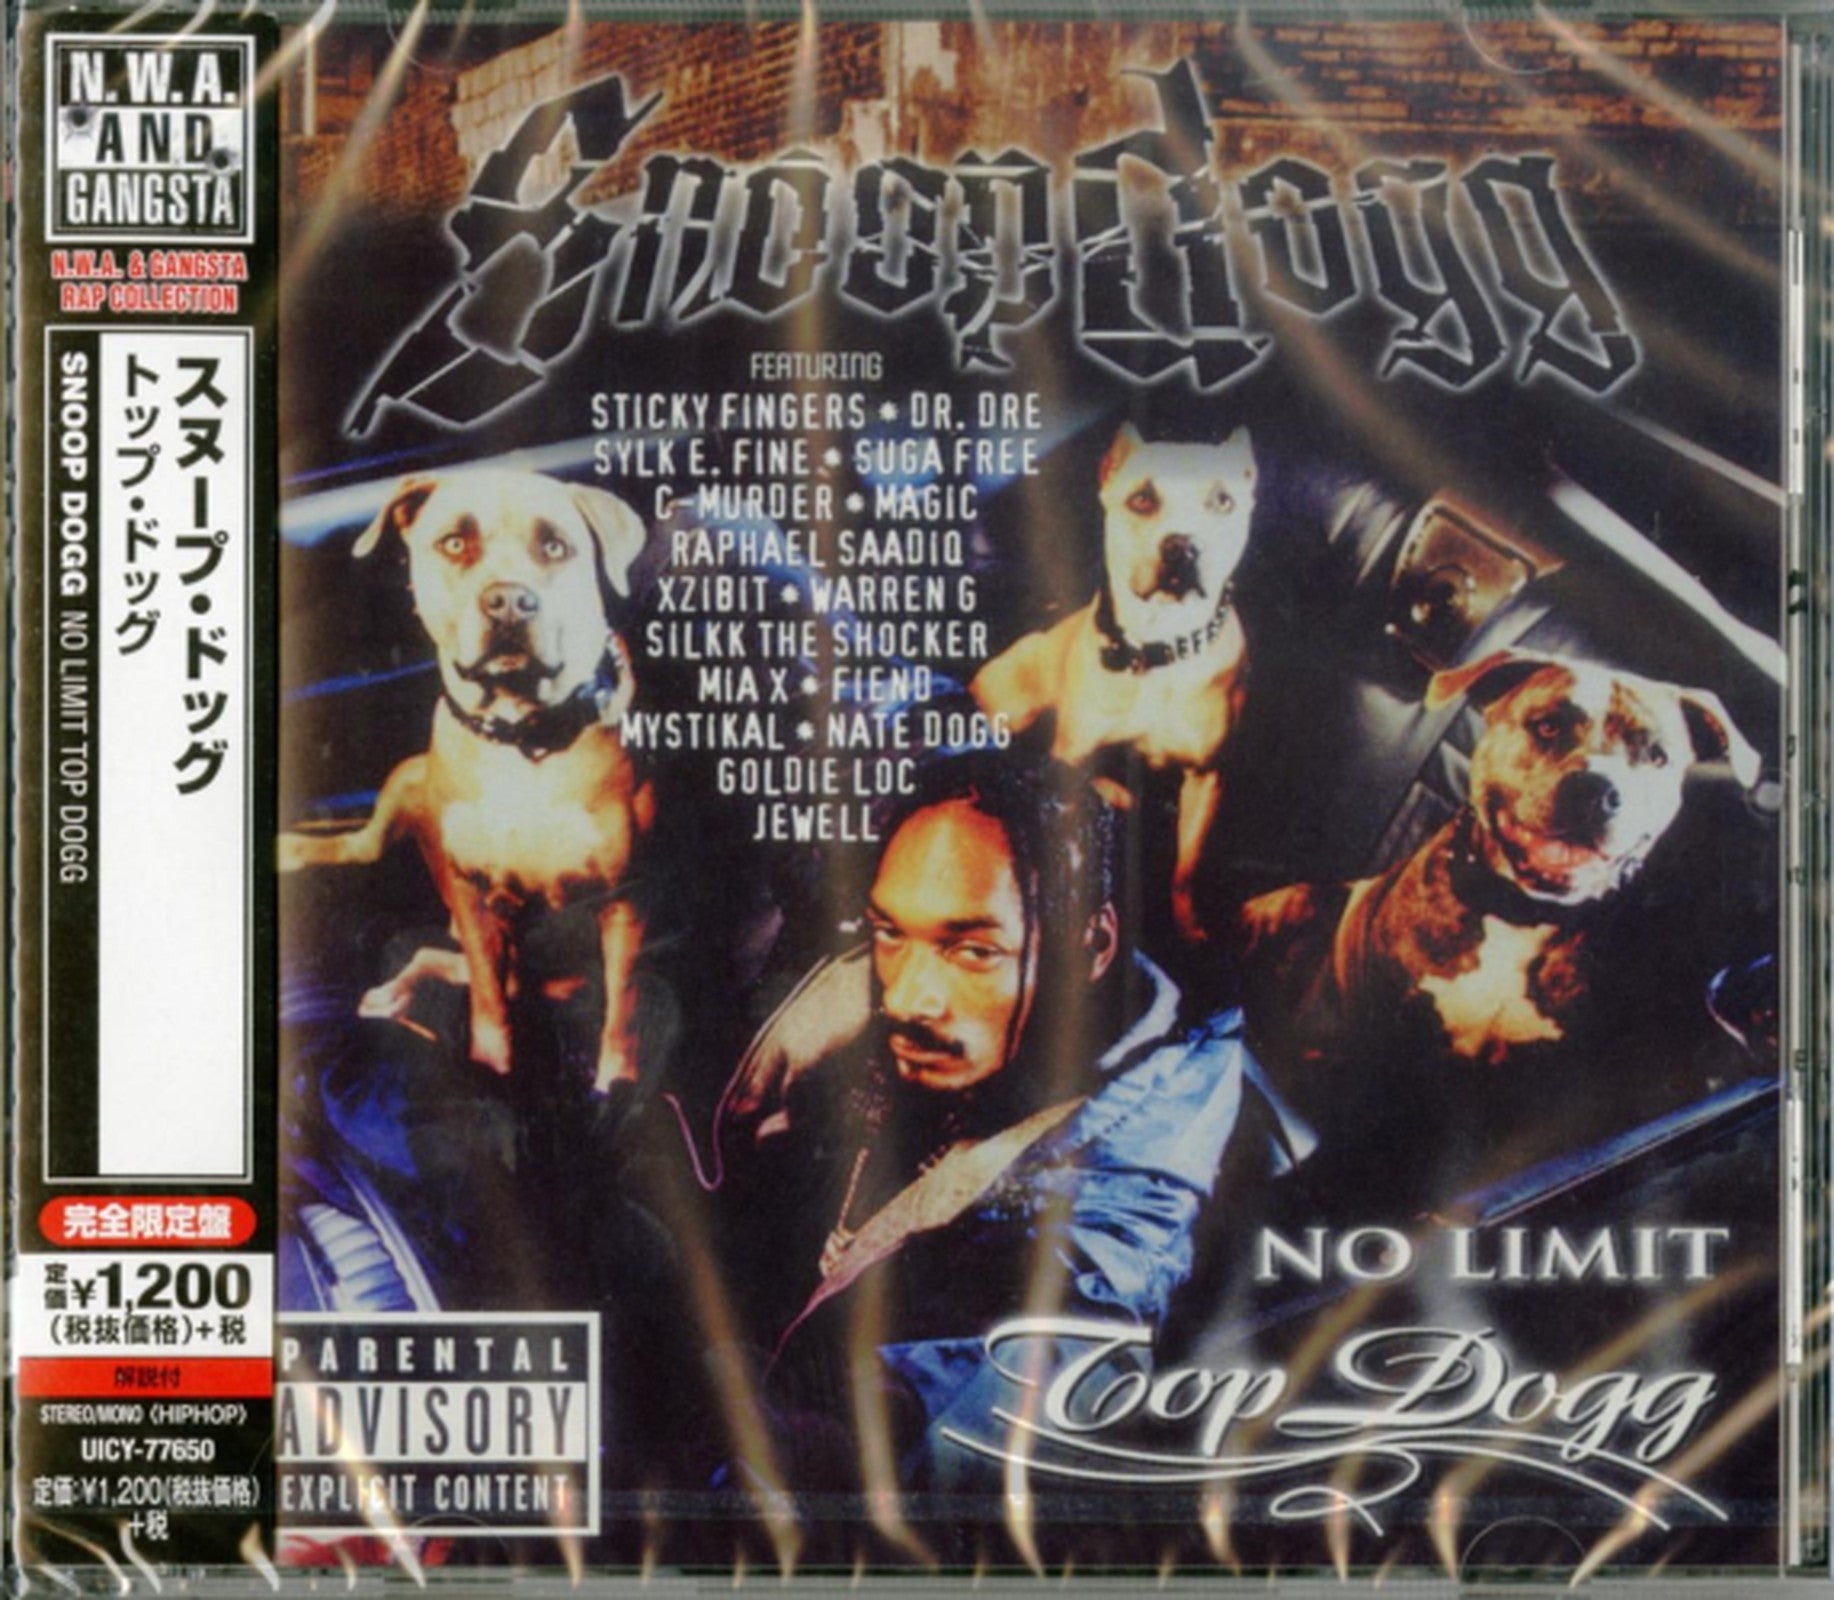 Snoop Dogg - No Limit Top Dogg - Japan CD - CDs Vinyl Japan Store